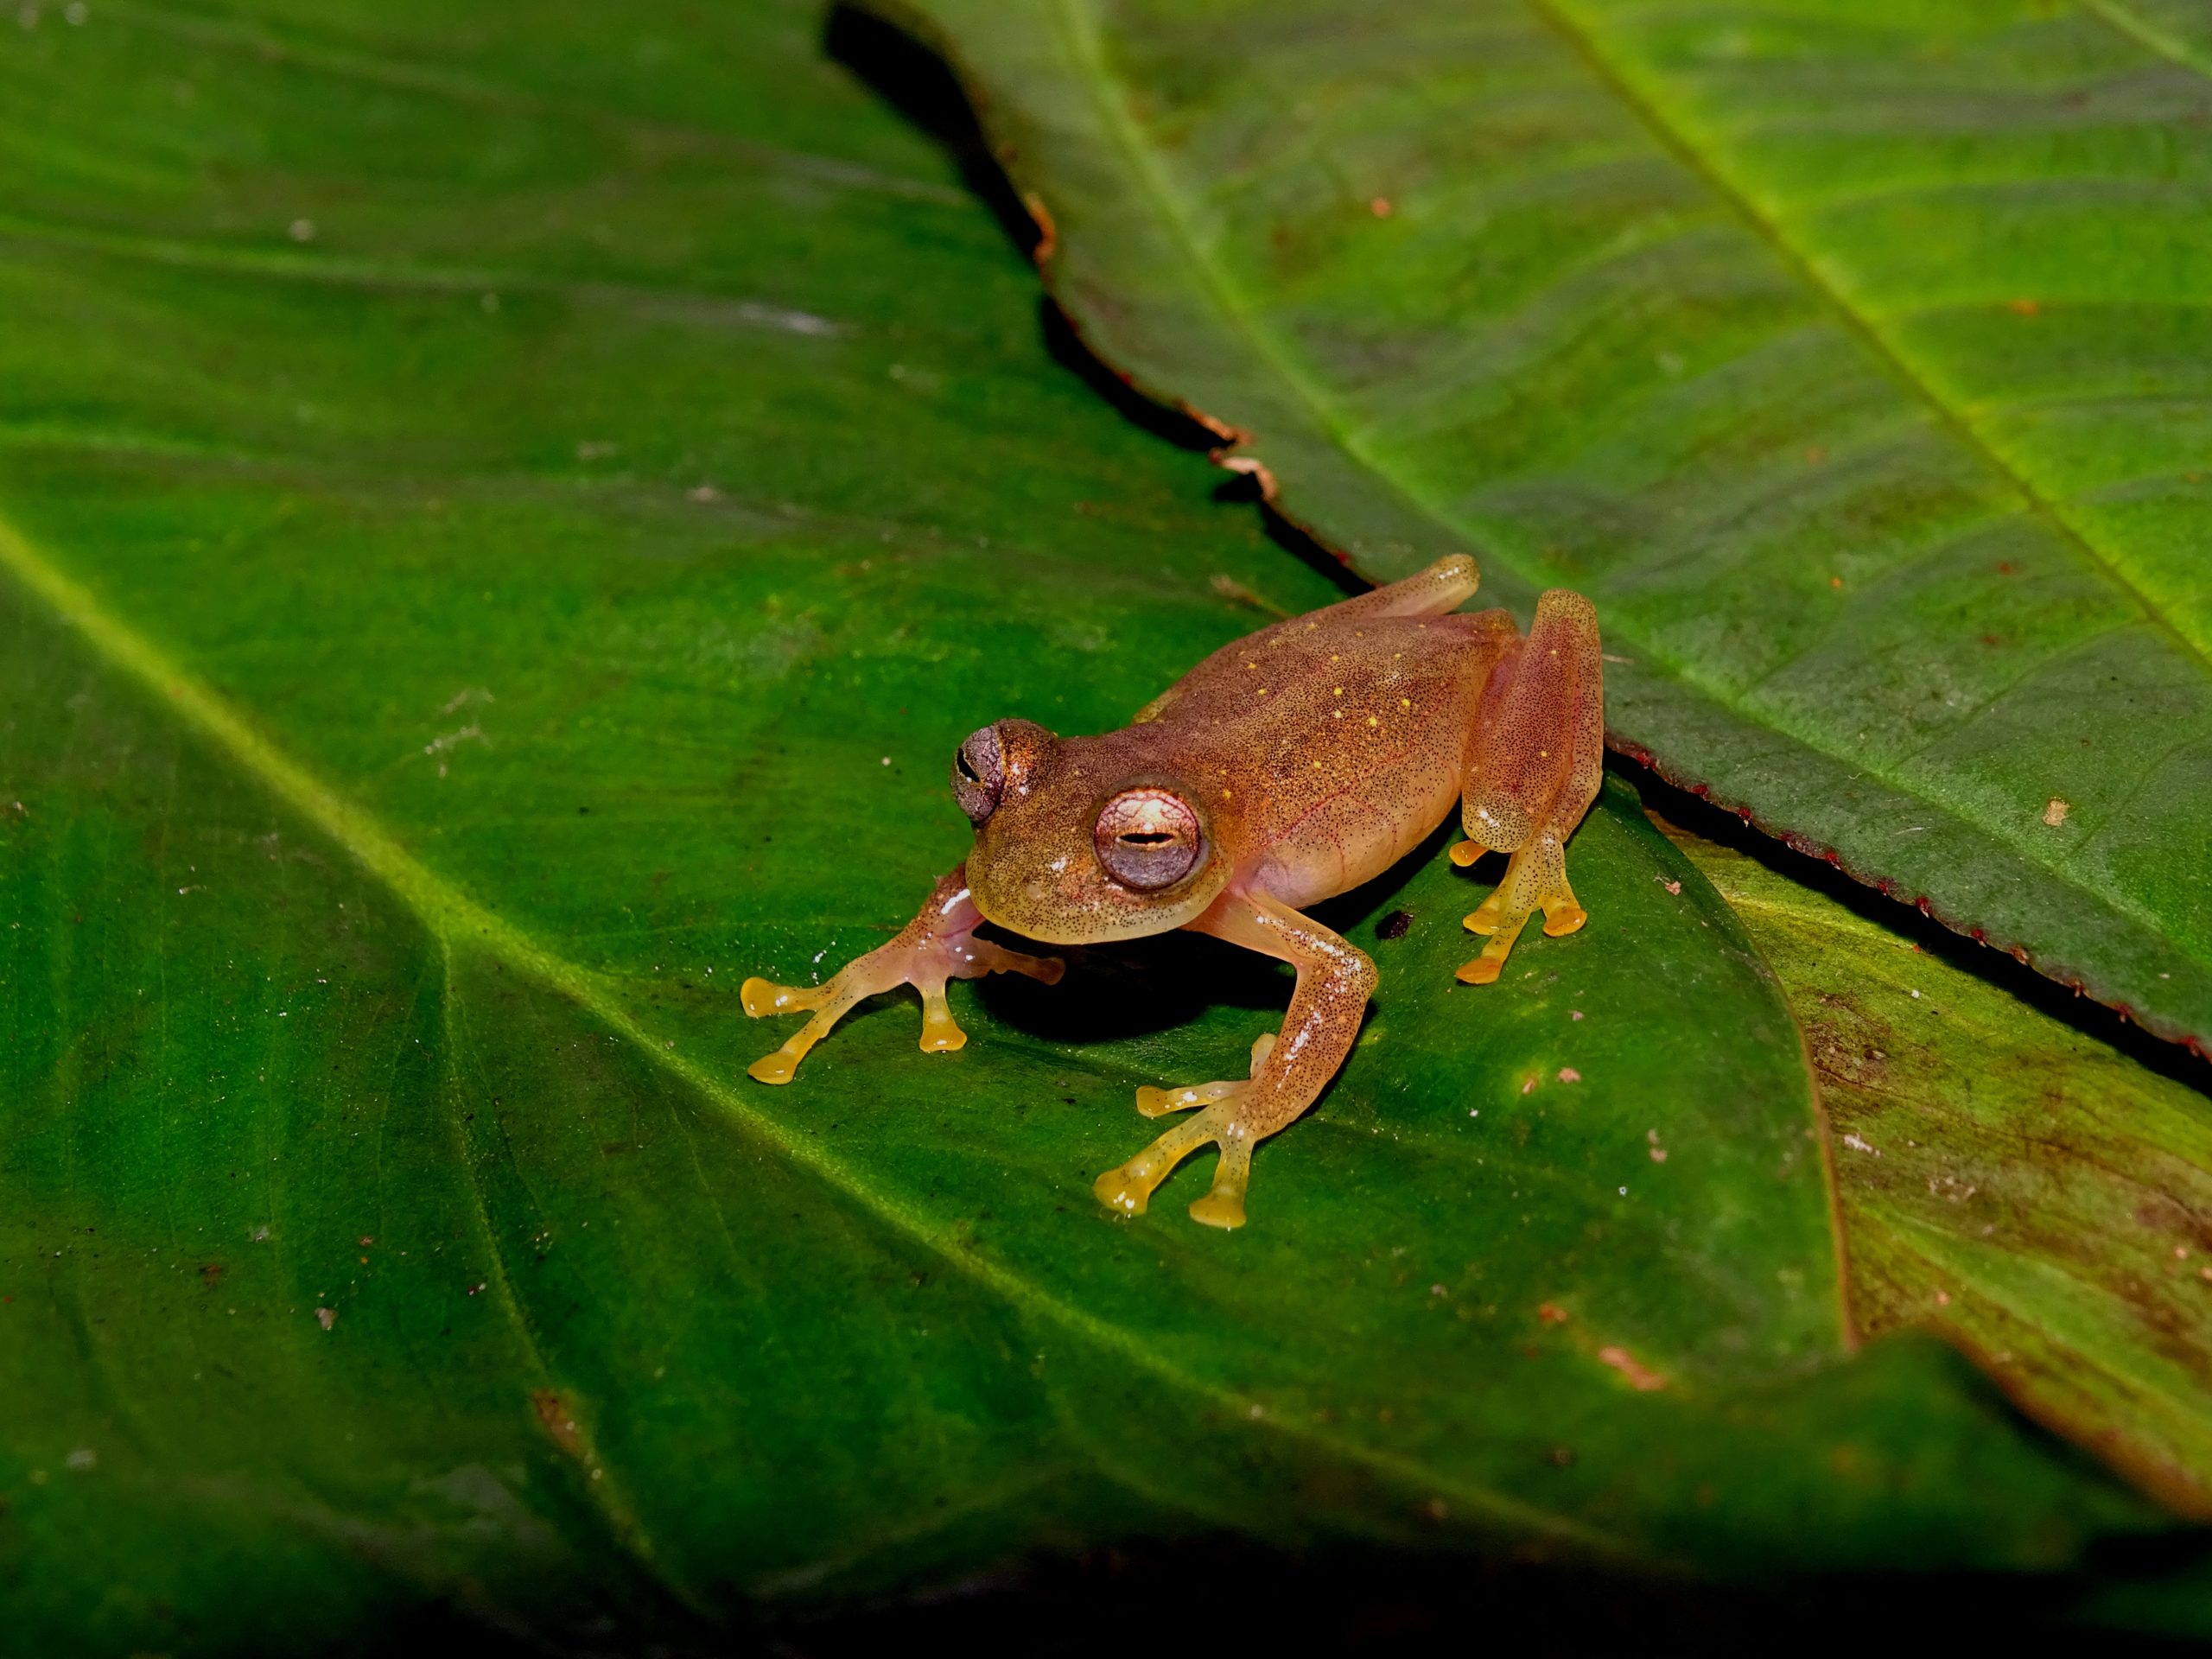 Rana-decristal-spilotus-endemica..